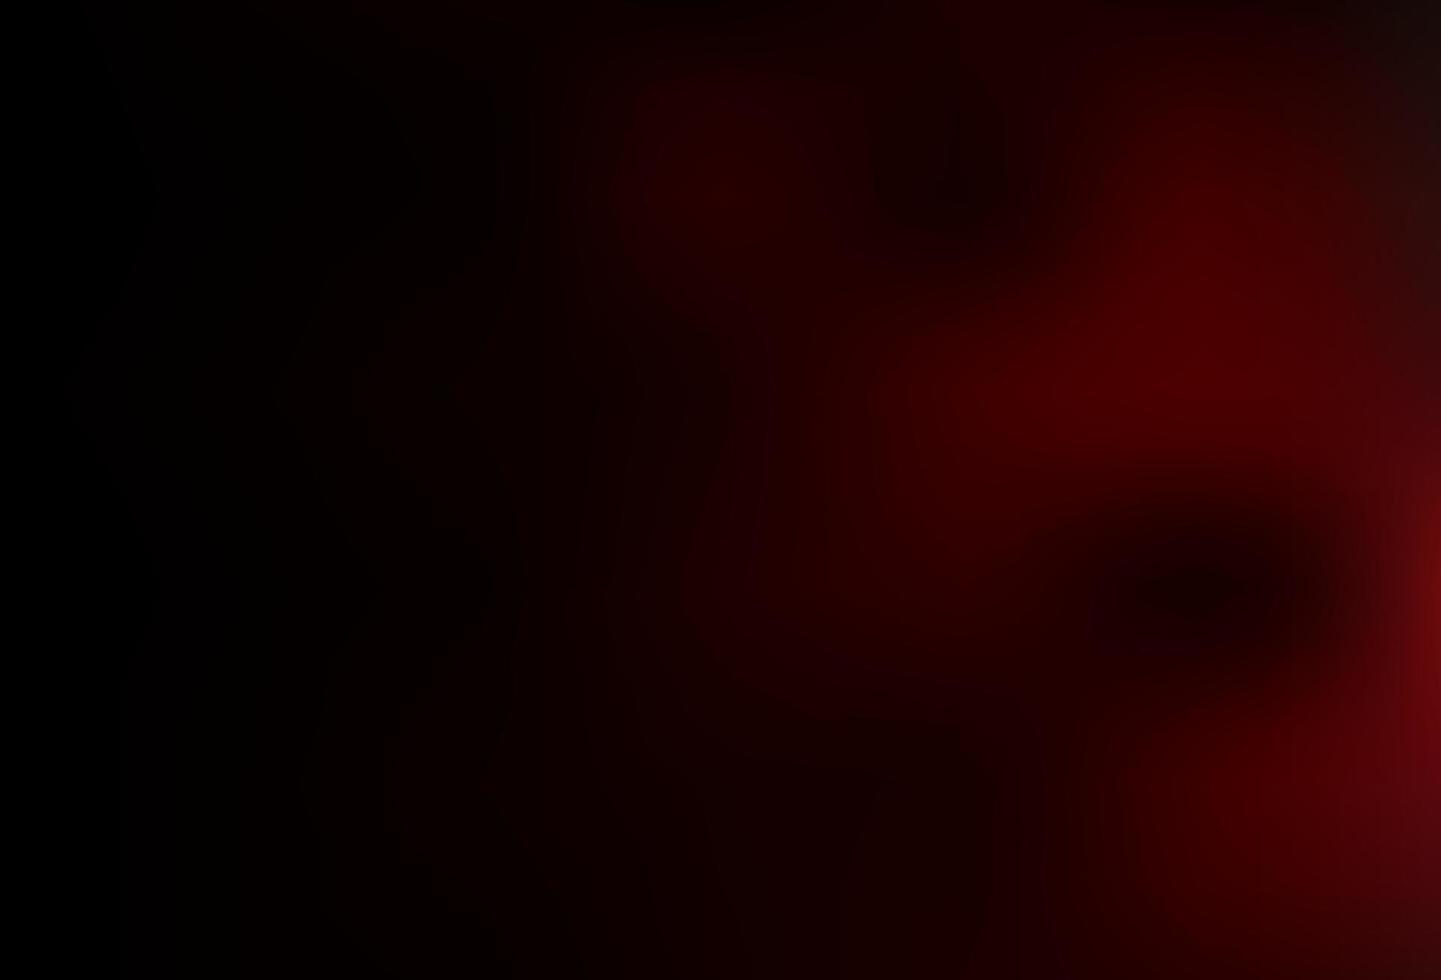 fundo desfocado abstrato do vetor vermelho escuro.